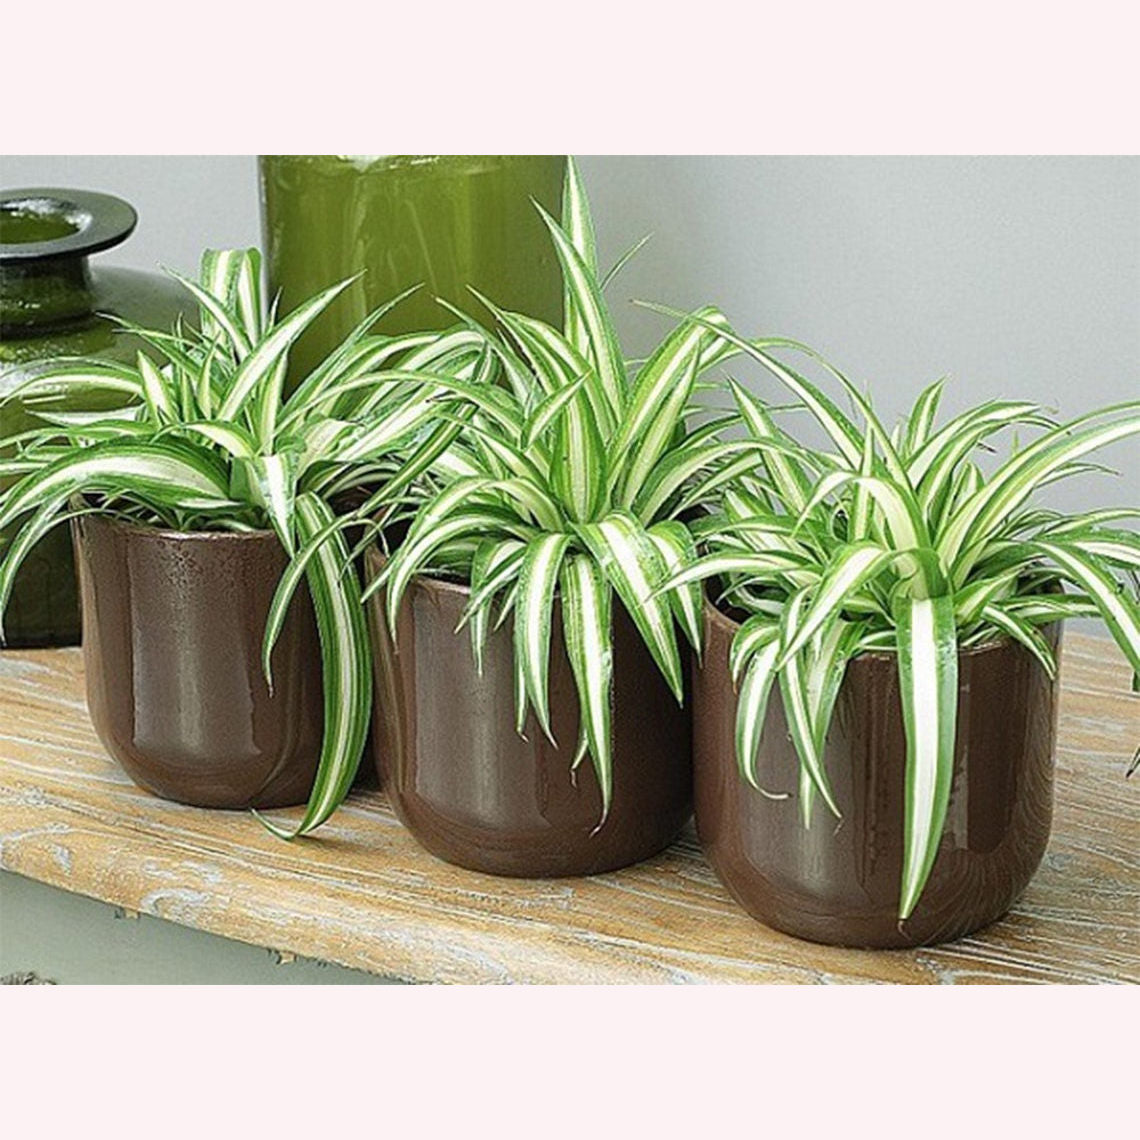 Three Spider Plants in 6" pots.